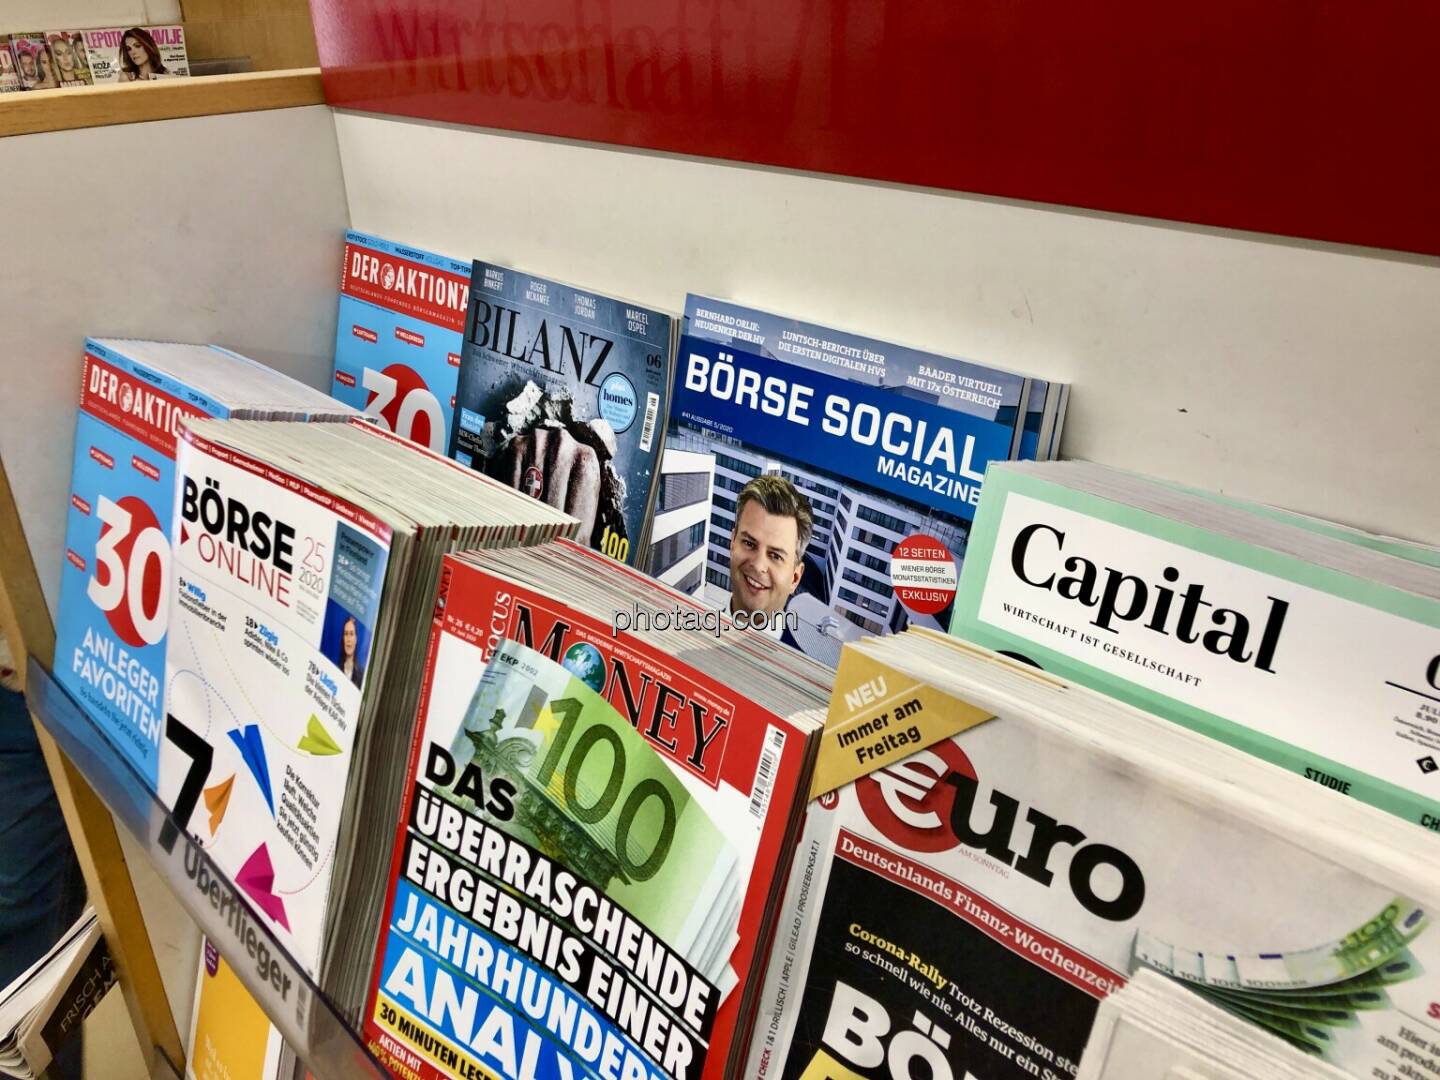 Börse Social Magazine #41, Kiosk, Morawa, Telekom Austria, Thomas Arnoldner 
http://boerse-social.com/magazine